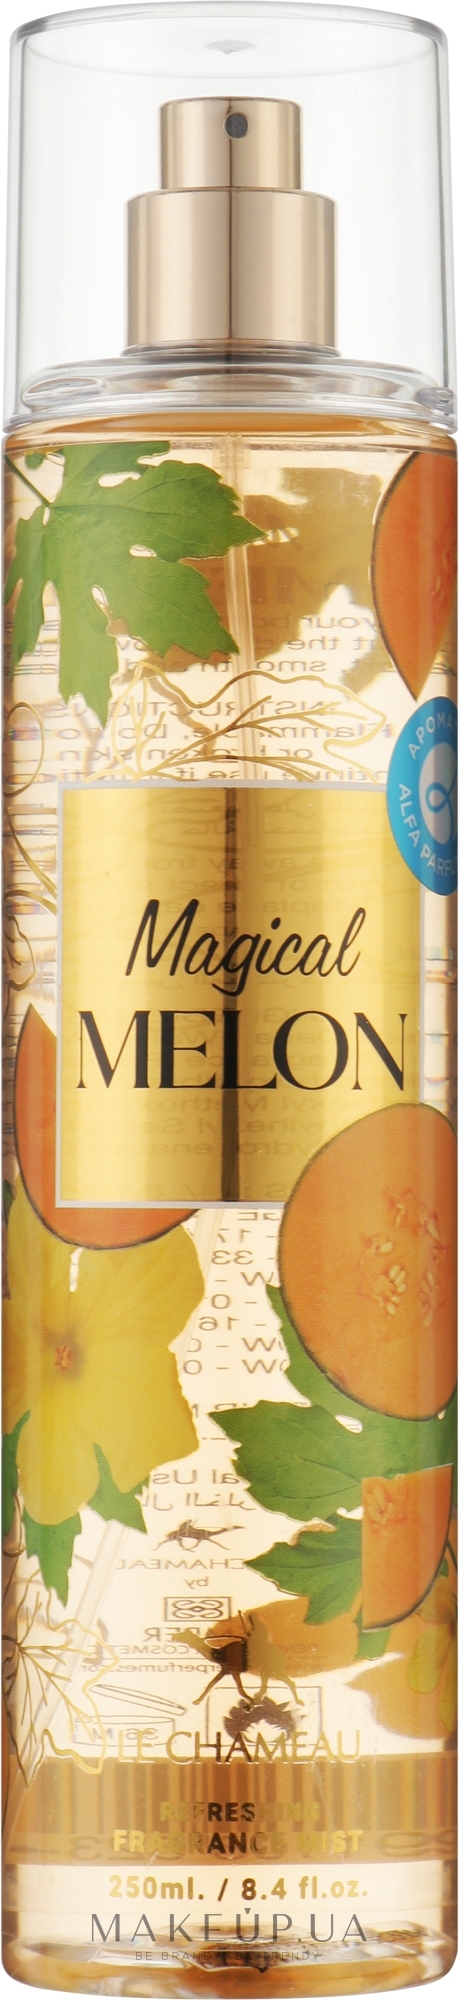 Міст для тіла - Le Chameau Magical Melon Fruity Body Mist — фото 250ml